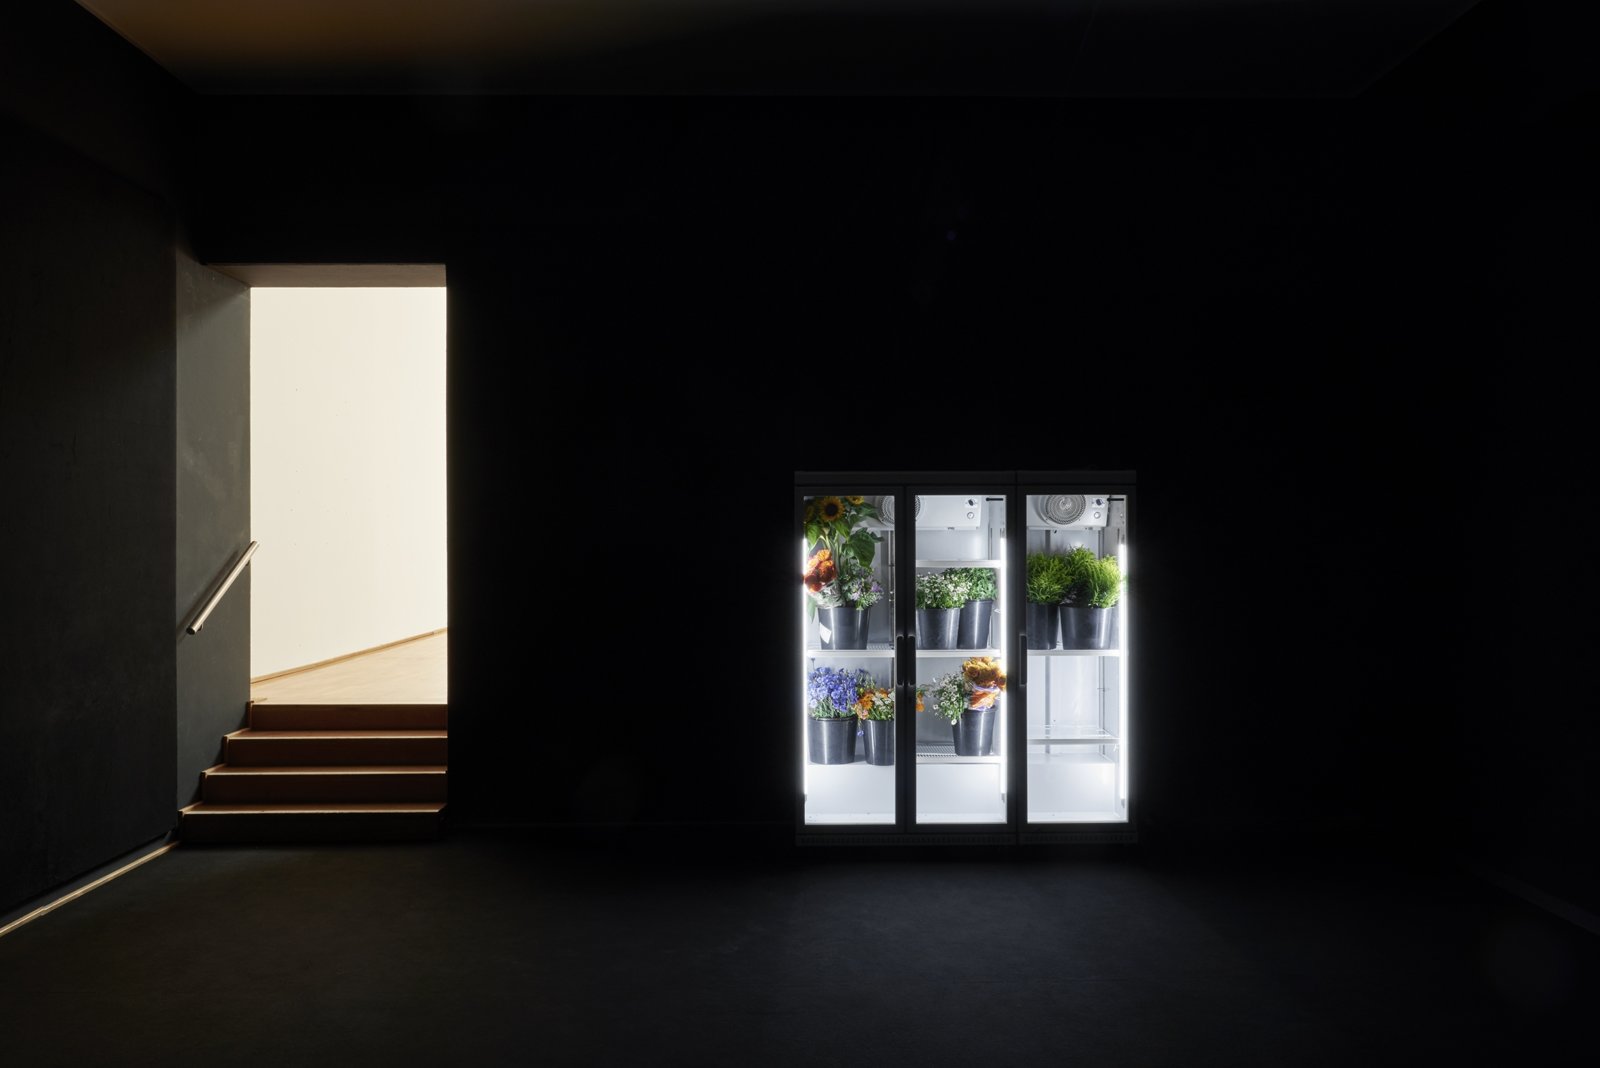 Abbas Akhavan, study for a glasshouse, 2017, refrigerators, flowers, plastic buckets, 79 x 69 x 24 in. (200 x 175 x 60 cm). Installation view, Museum Villa Stuck, Munich, Germany, 2017